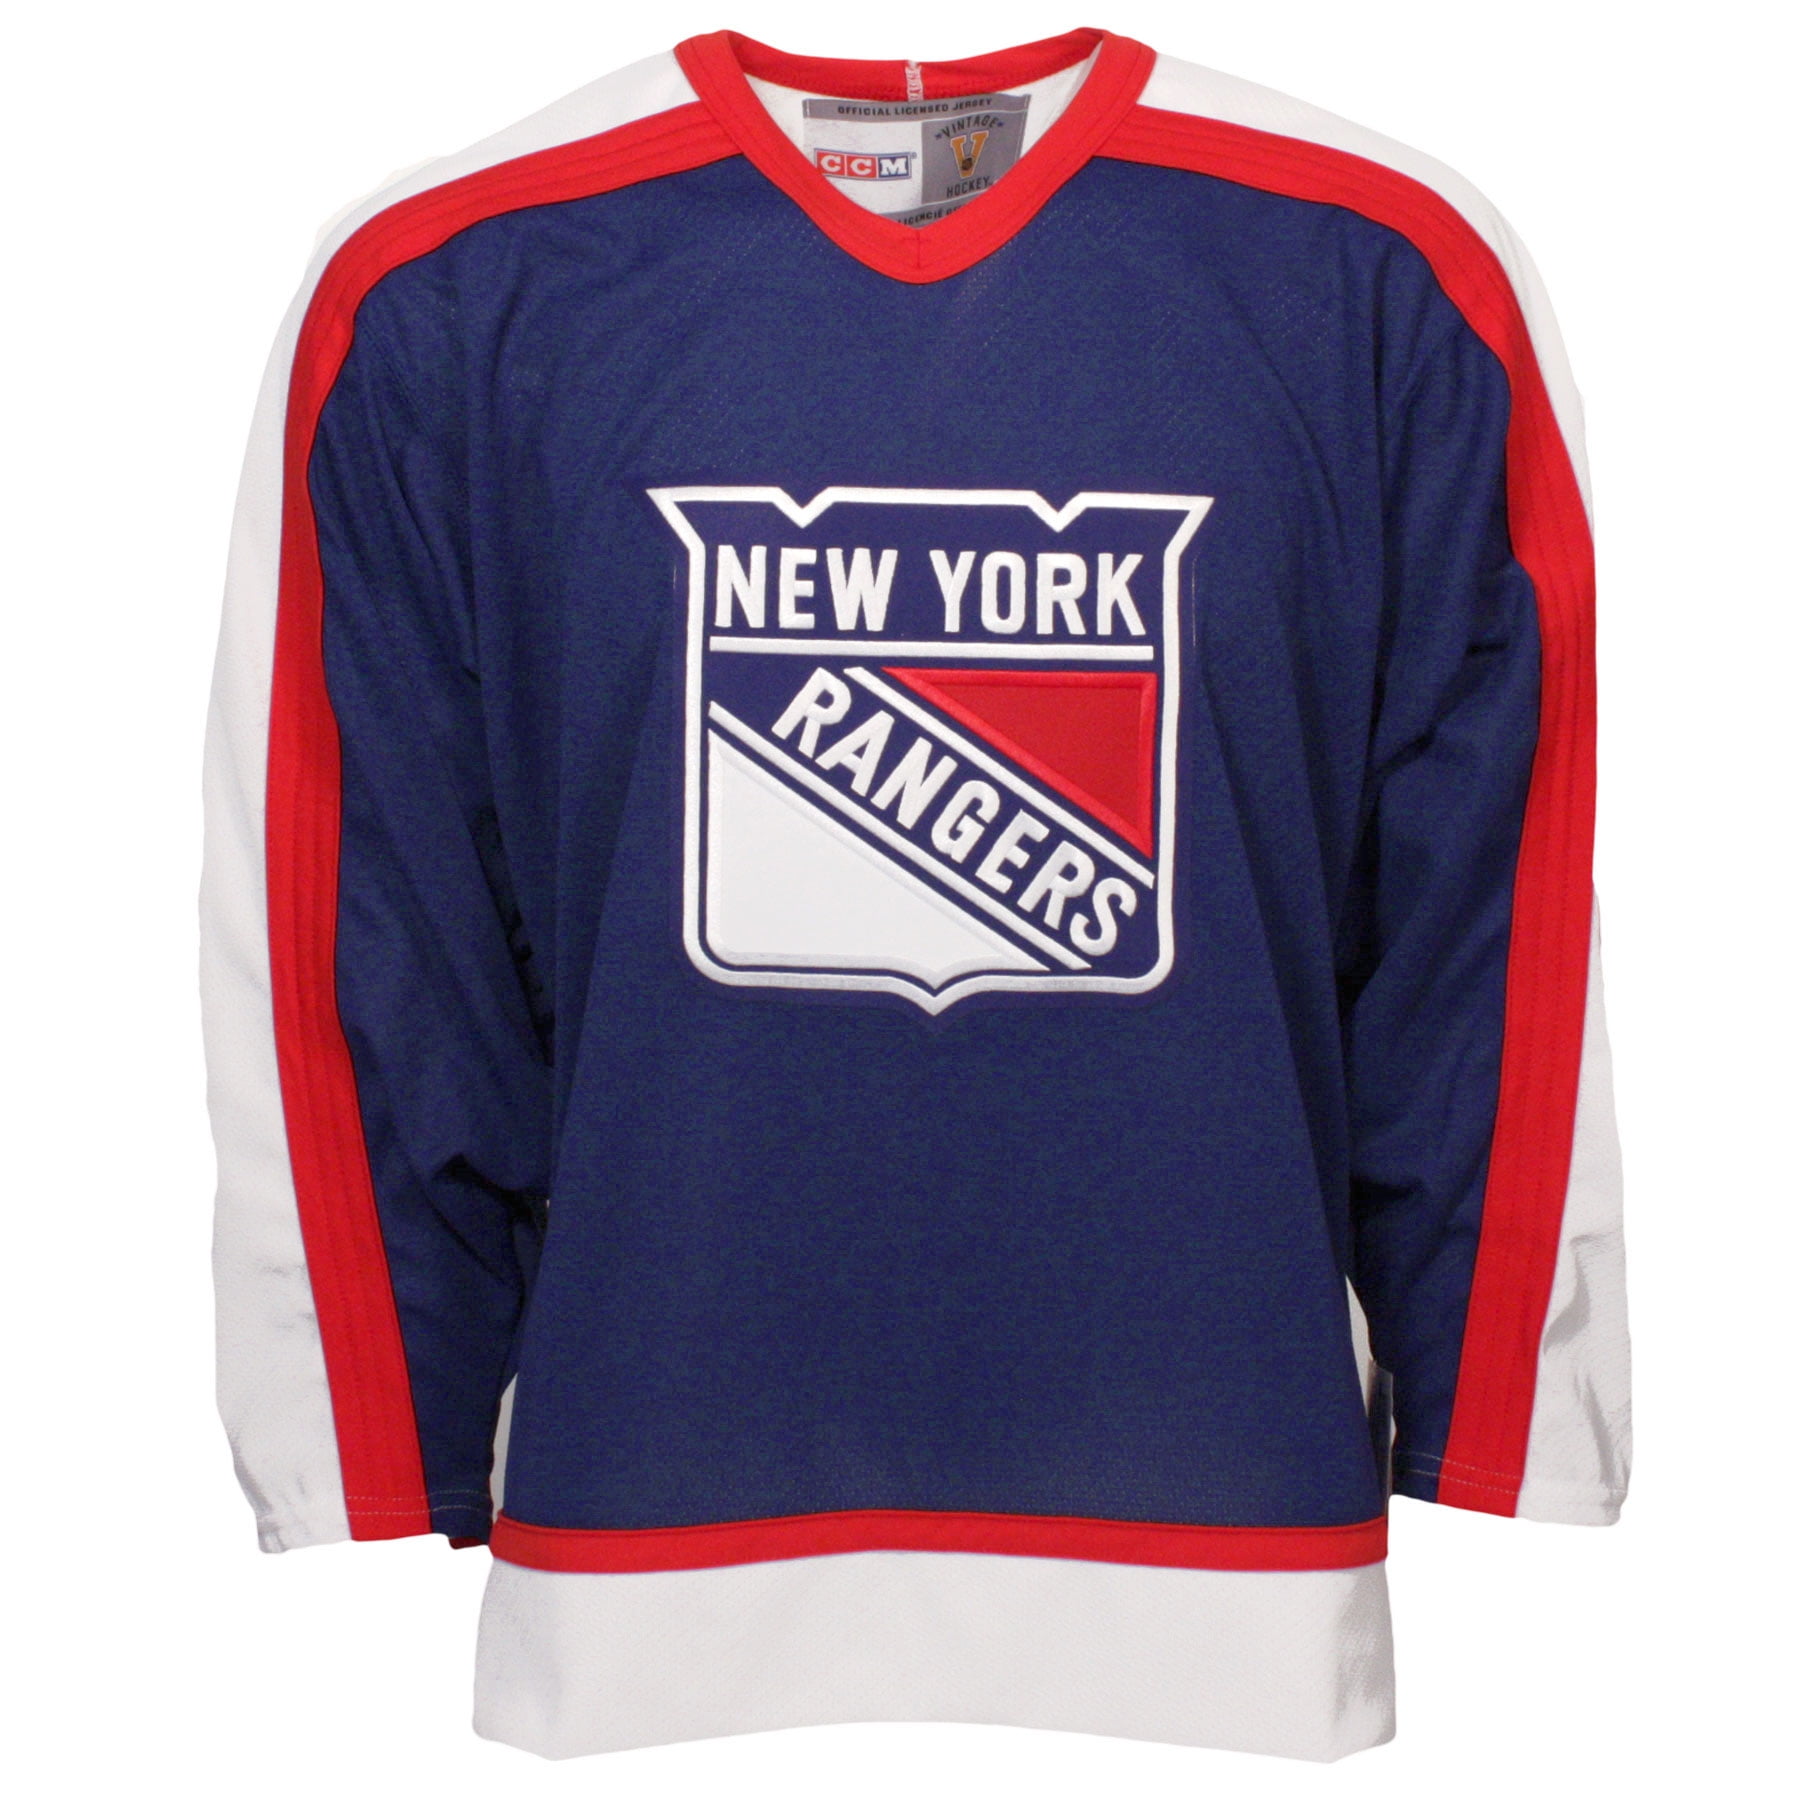 Buy Vintage New York Rangers Jersey 80s Rangers Jersey New York